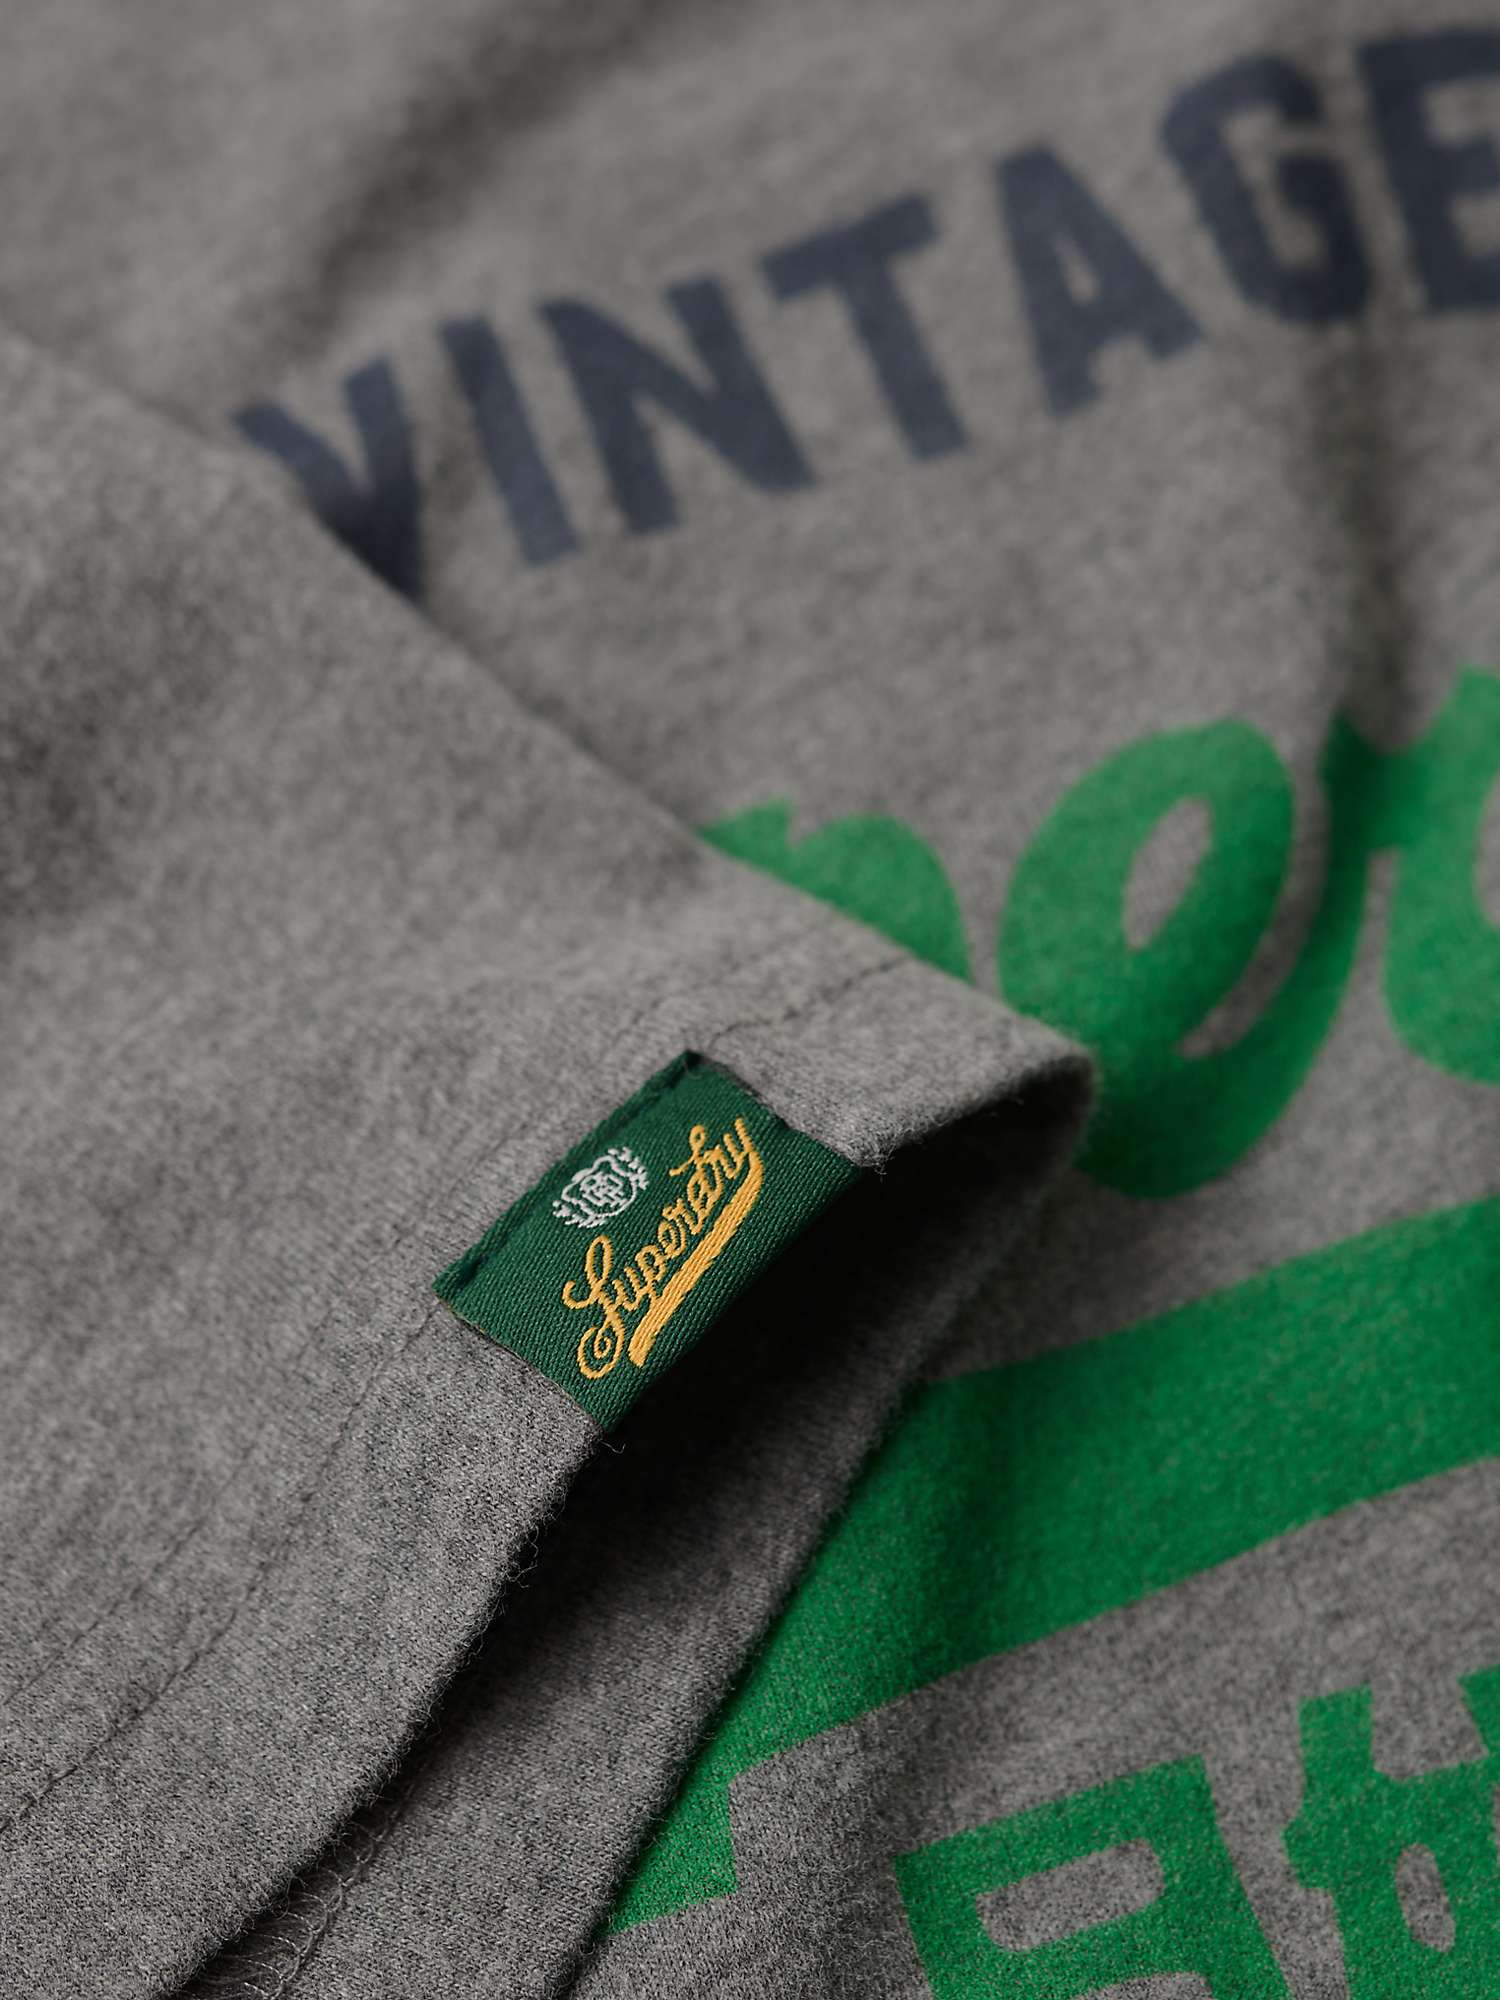 Buy Superdry Vintage Logo Premium Goods T-Shirt Online at johnlewis.com